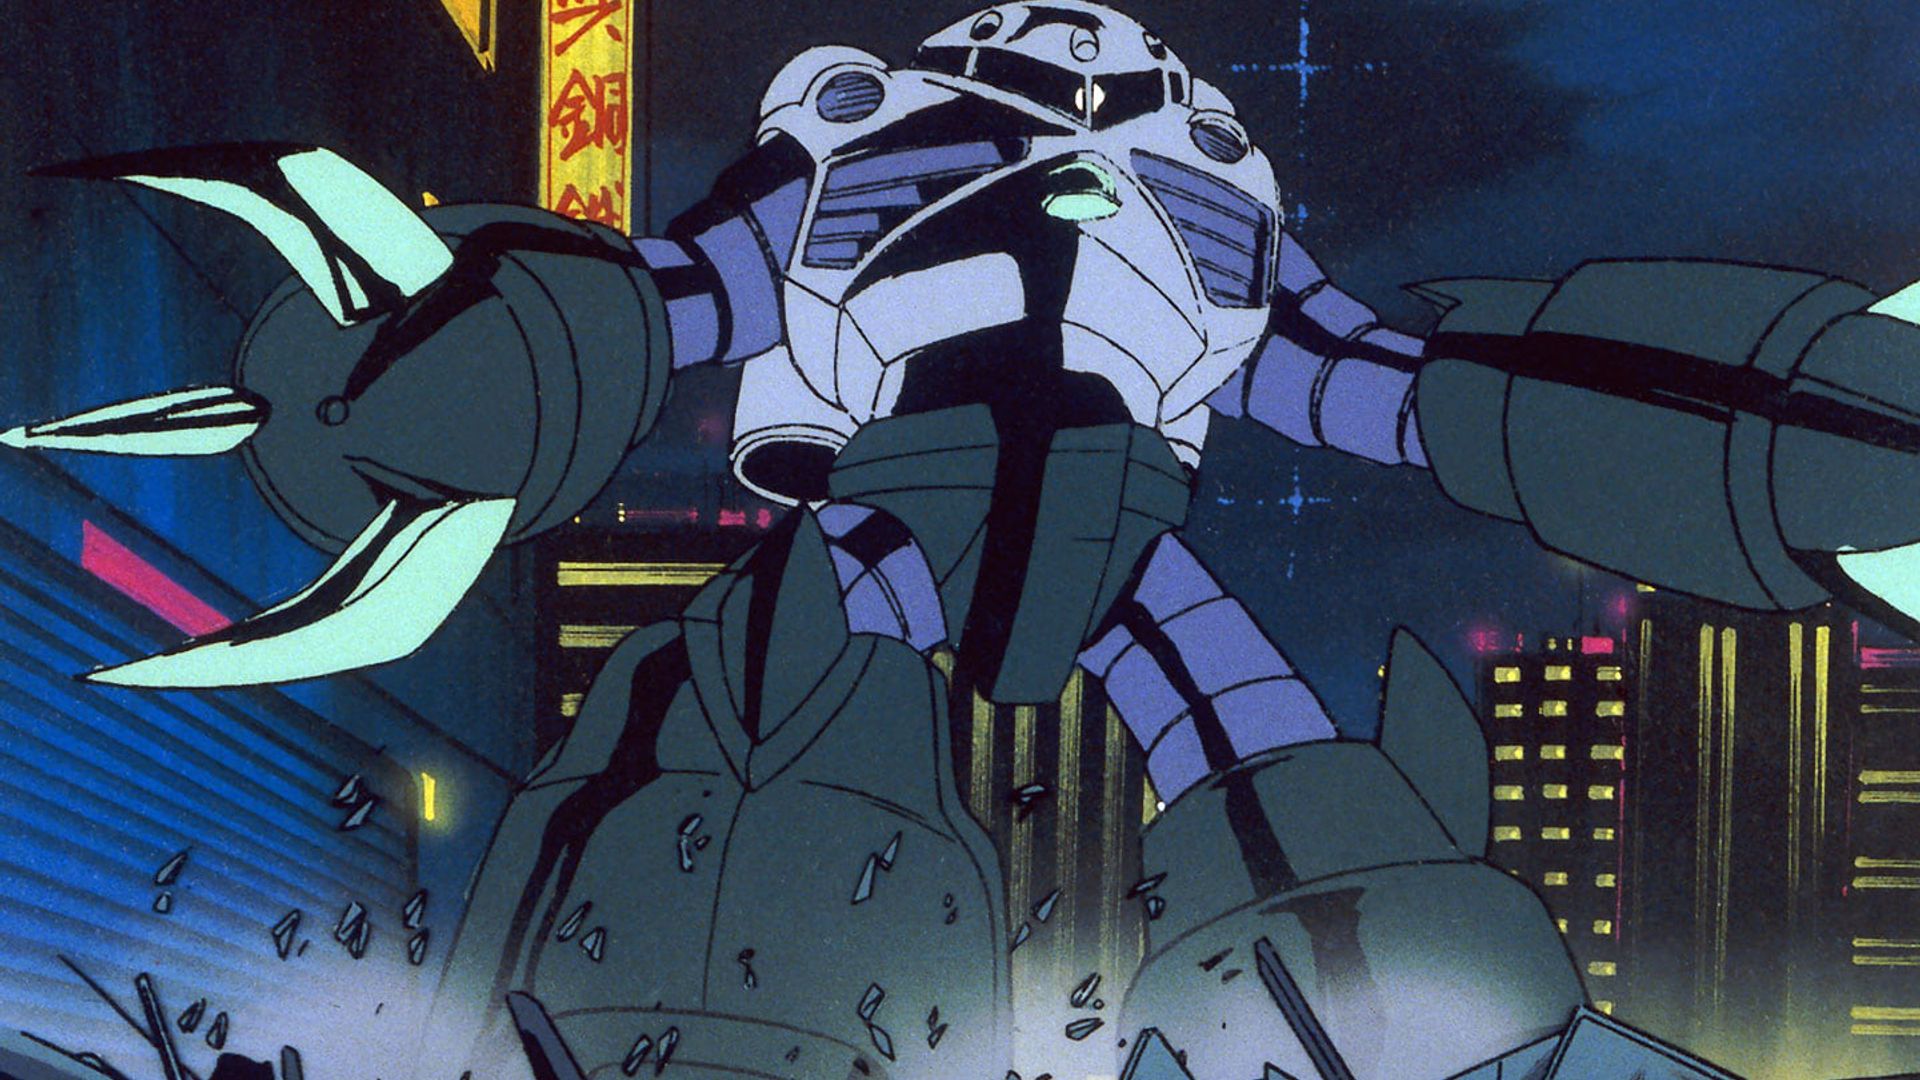 Mobile Suit Gundam ZZ background